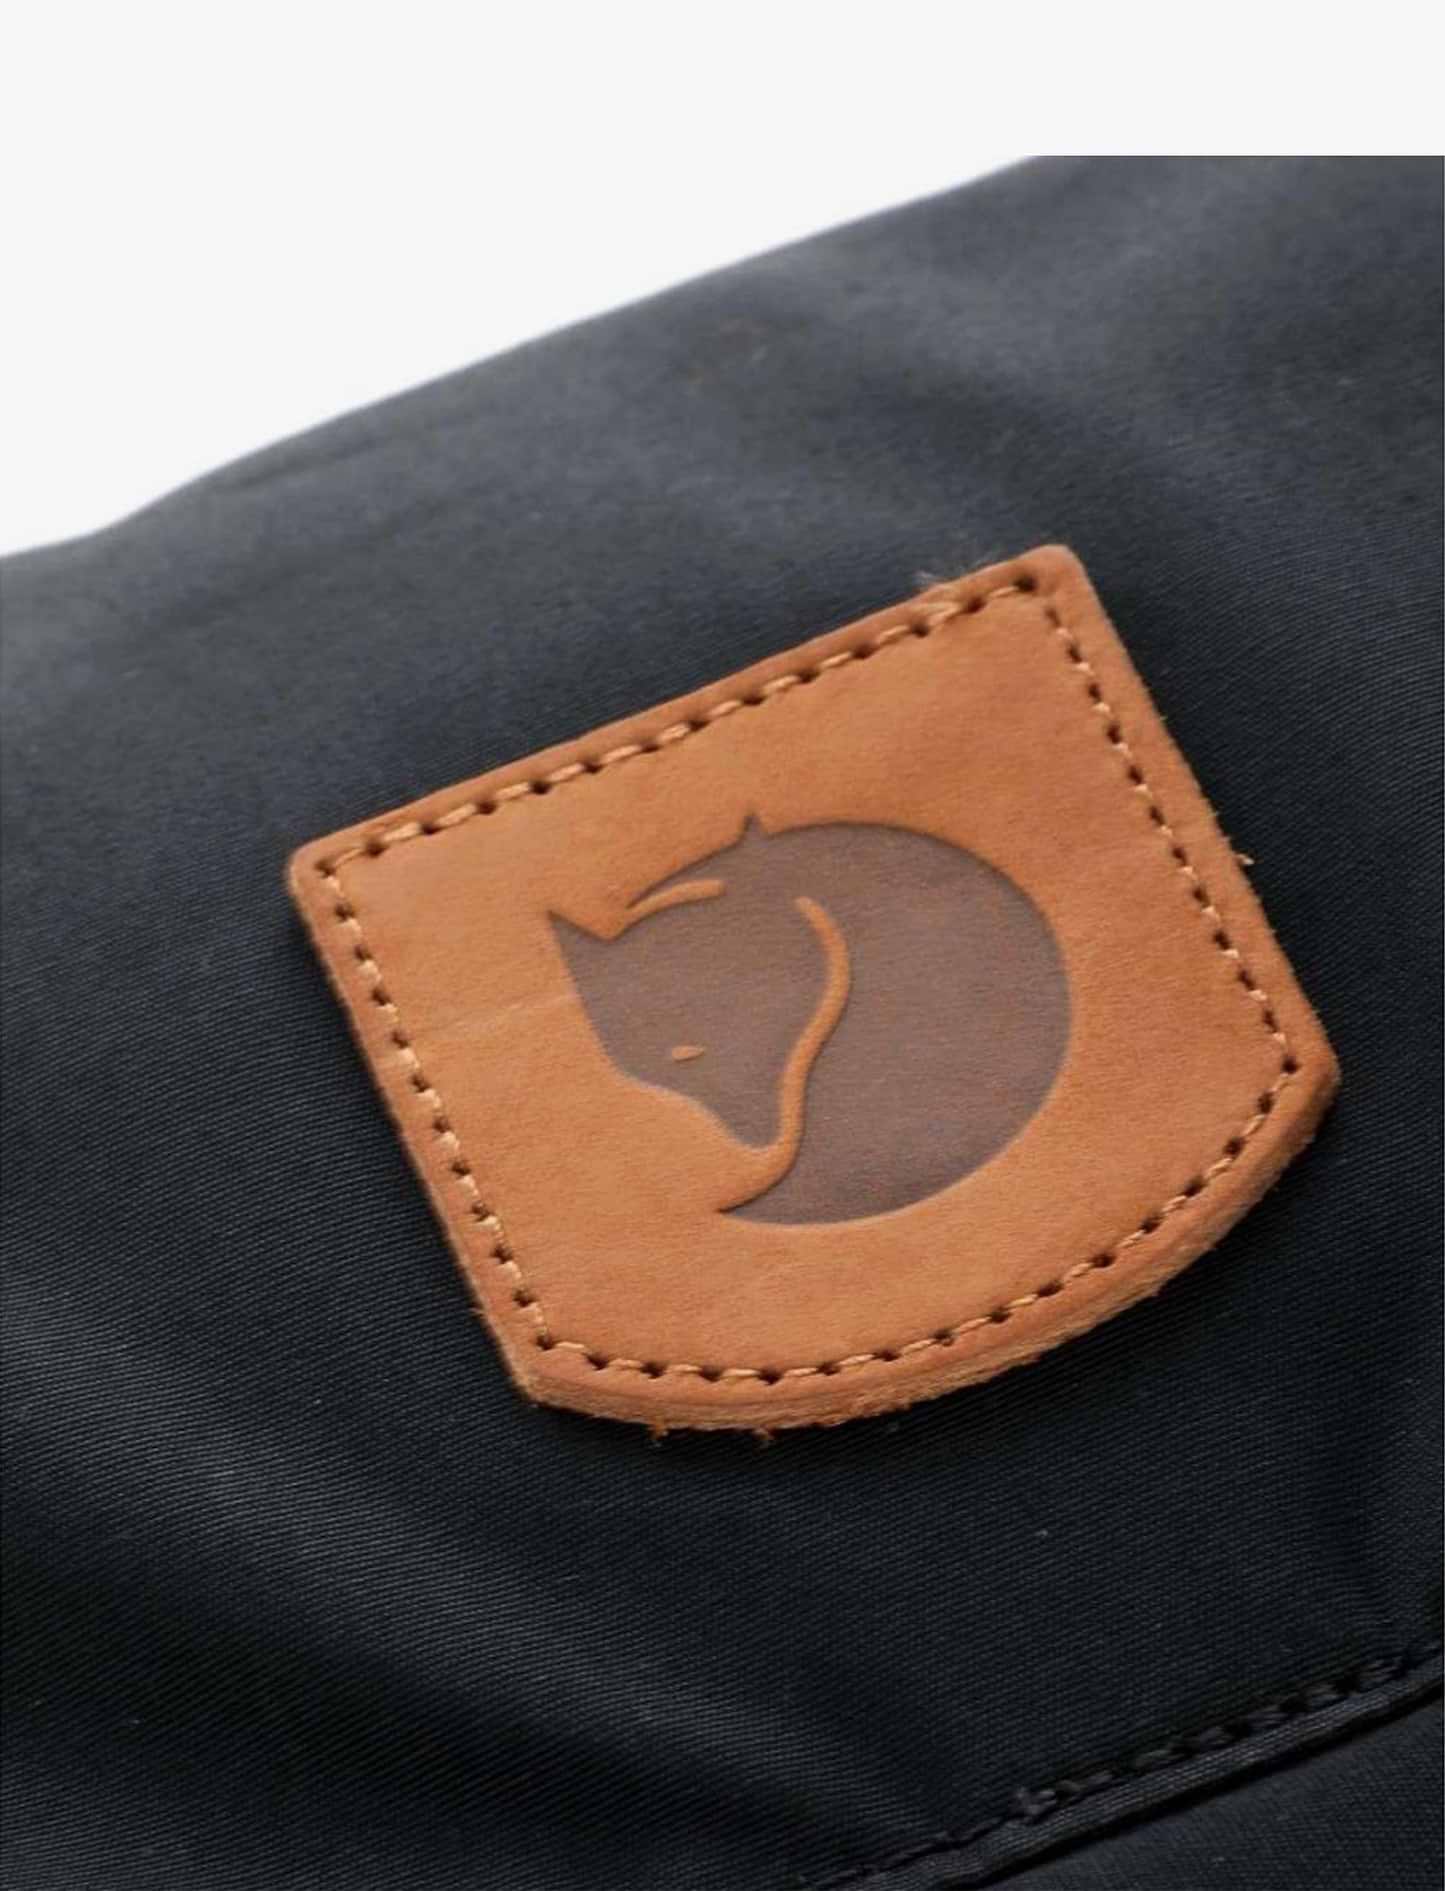 Kanken Greenland Shoulder Bag - תיק צד קנקן בצבע שחור